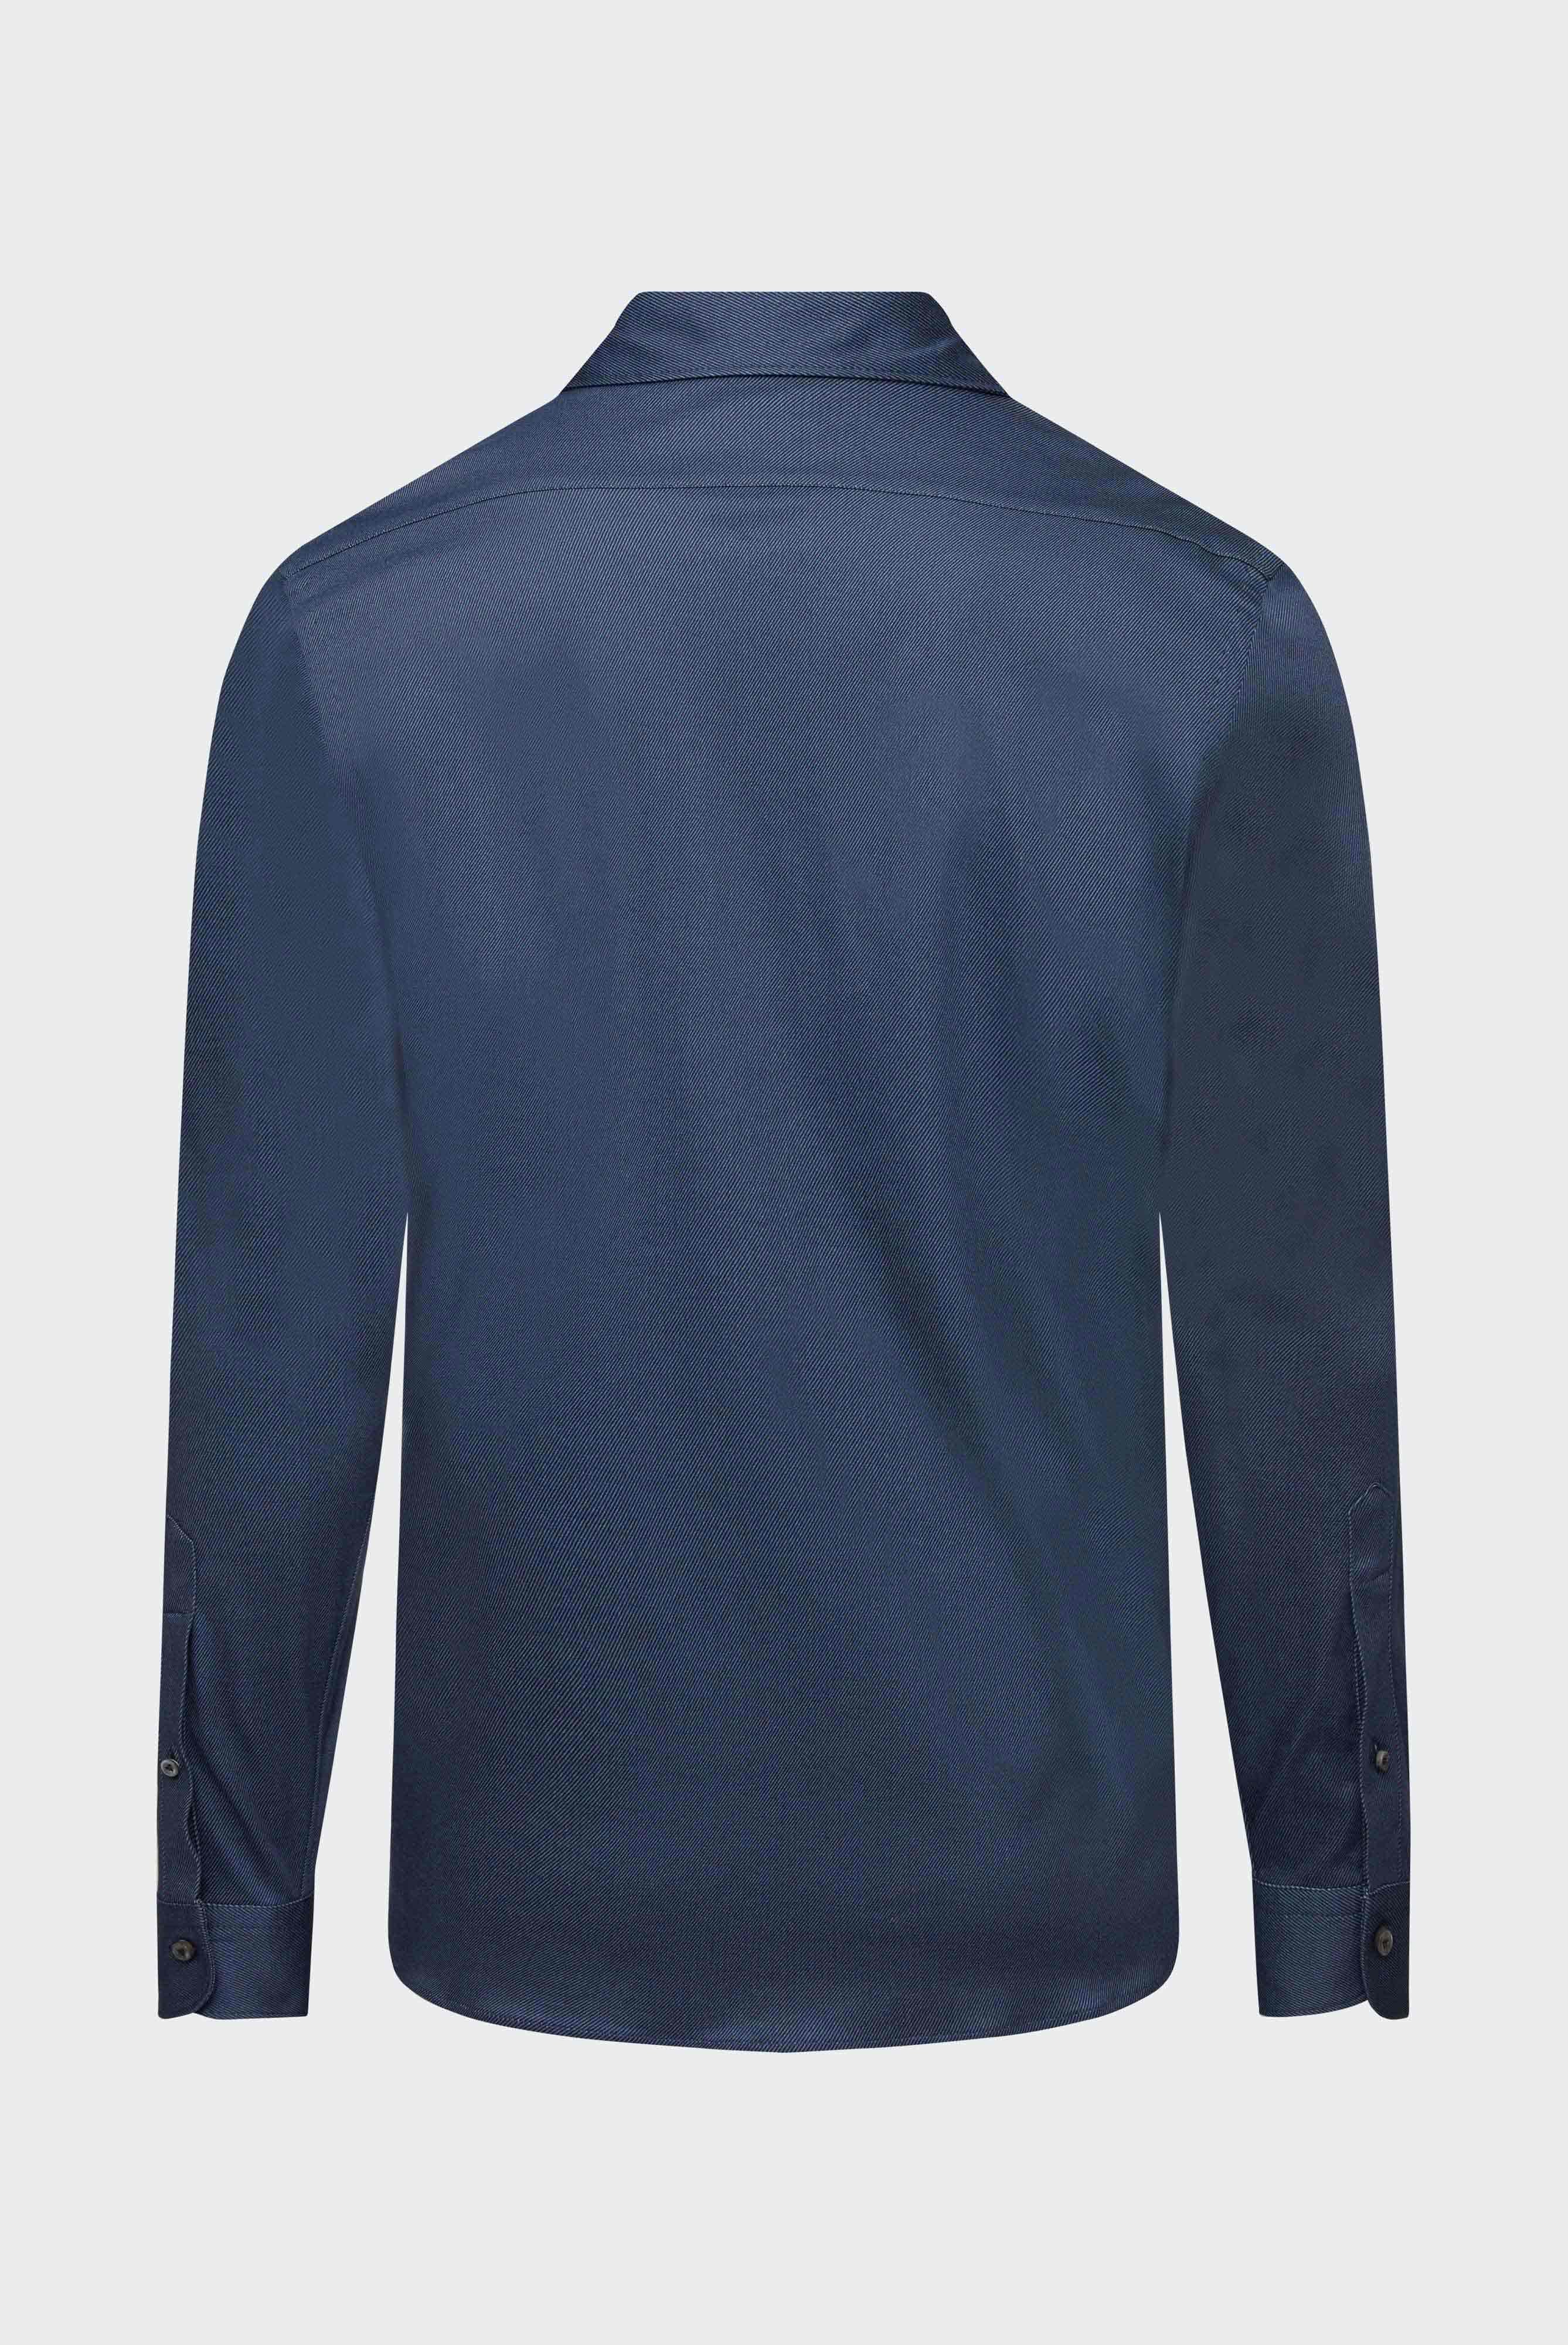 Casual Hemden+Jersey Hemd mit Twill Druck Tailor Fit+20.1683.UC.187749.782.S